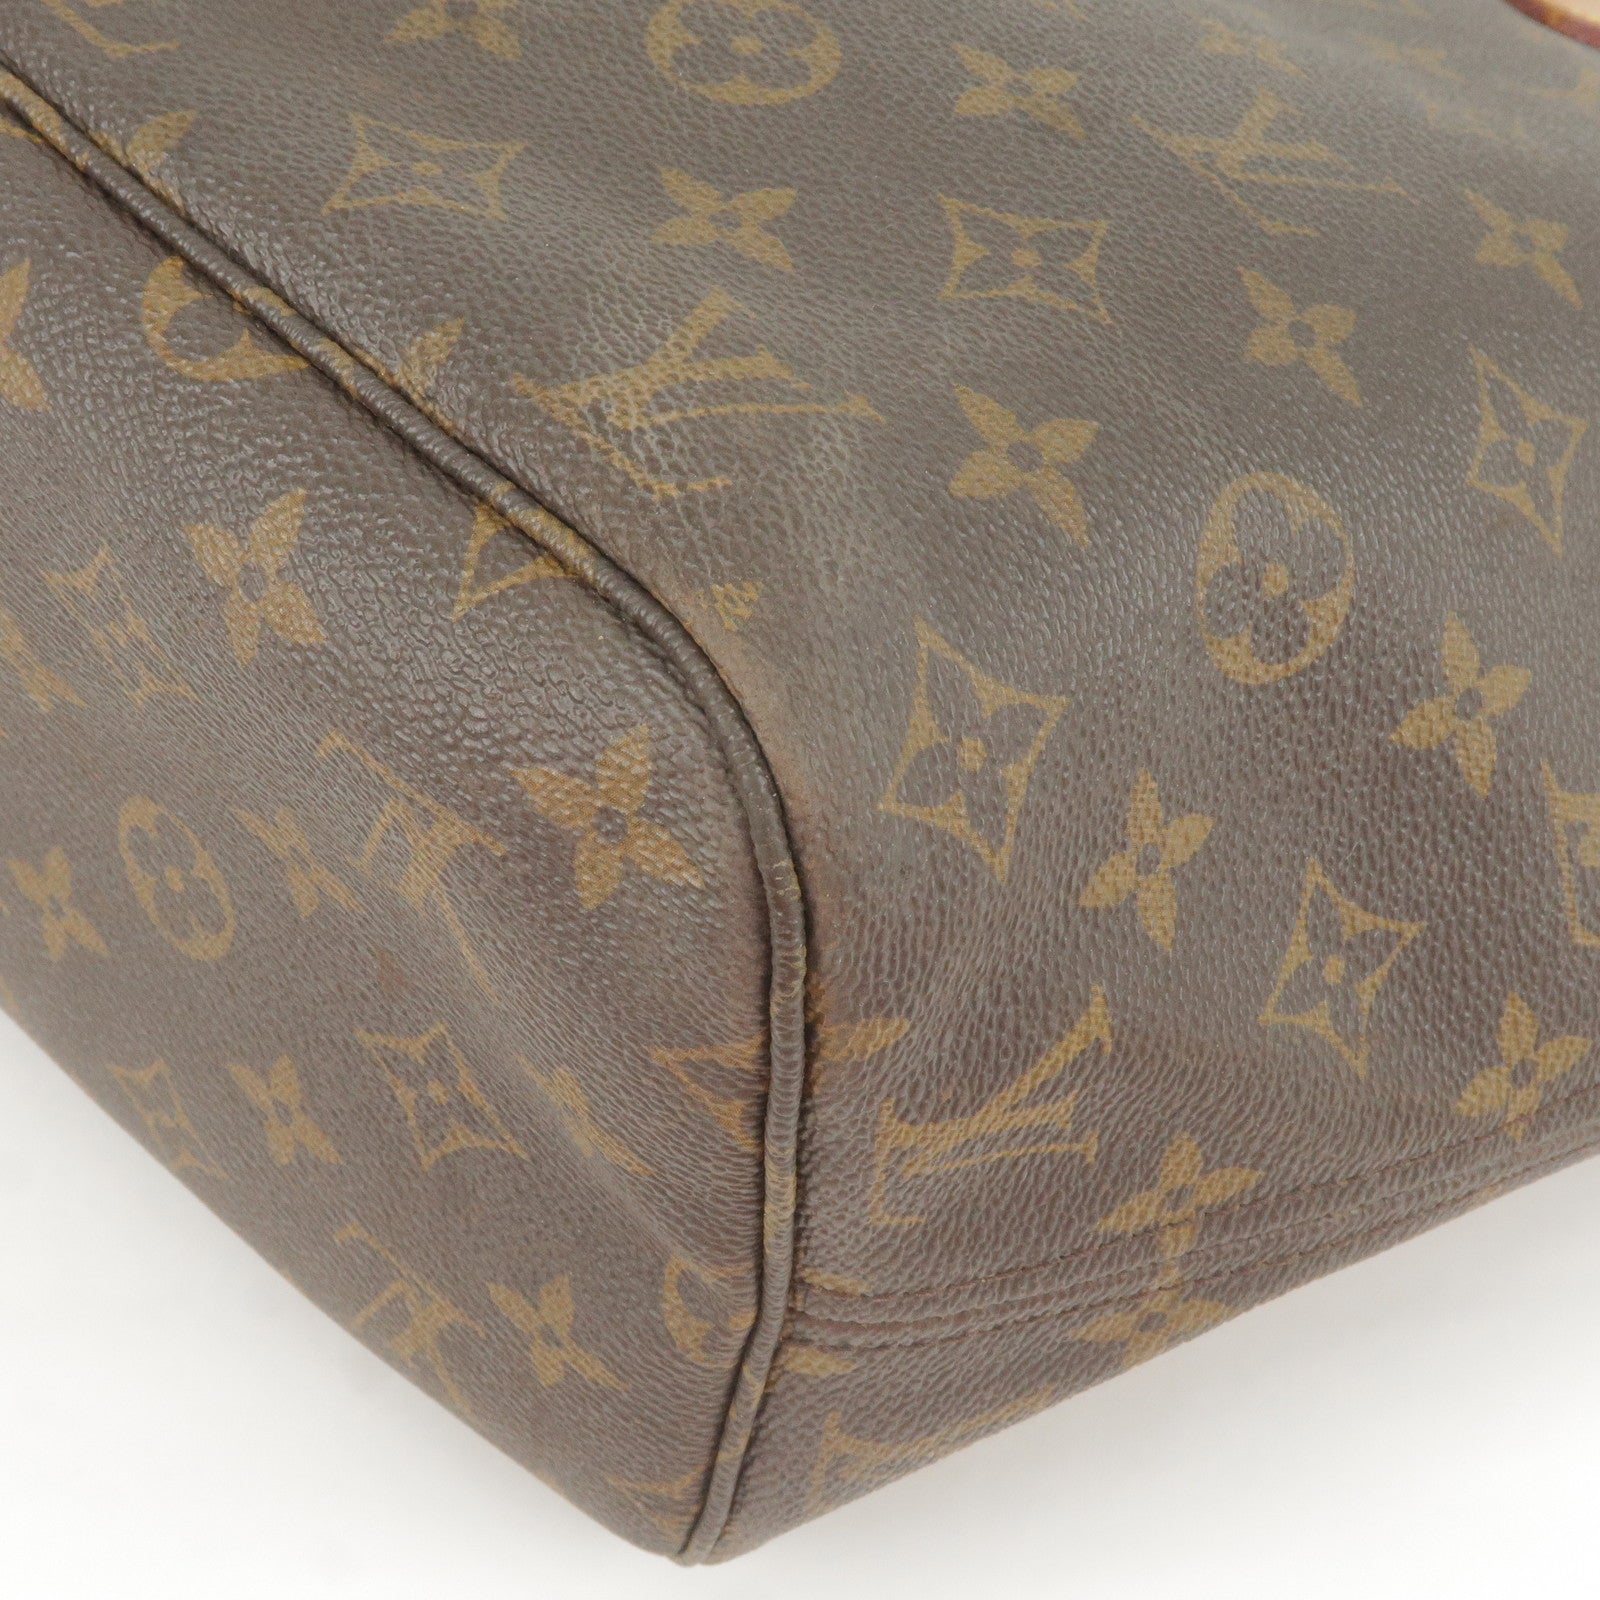 Louis Vuitton pre-owned Damier Eb ne Bloomsbury PM crossbody bag